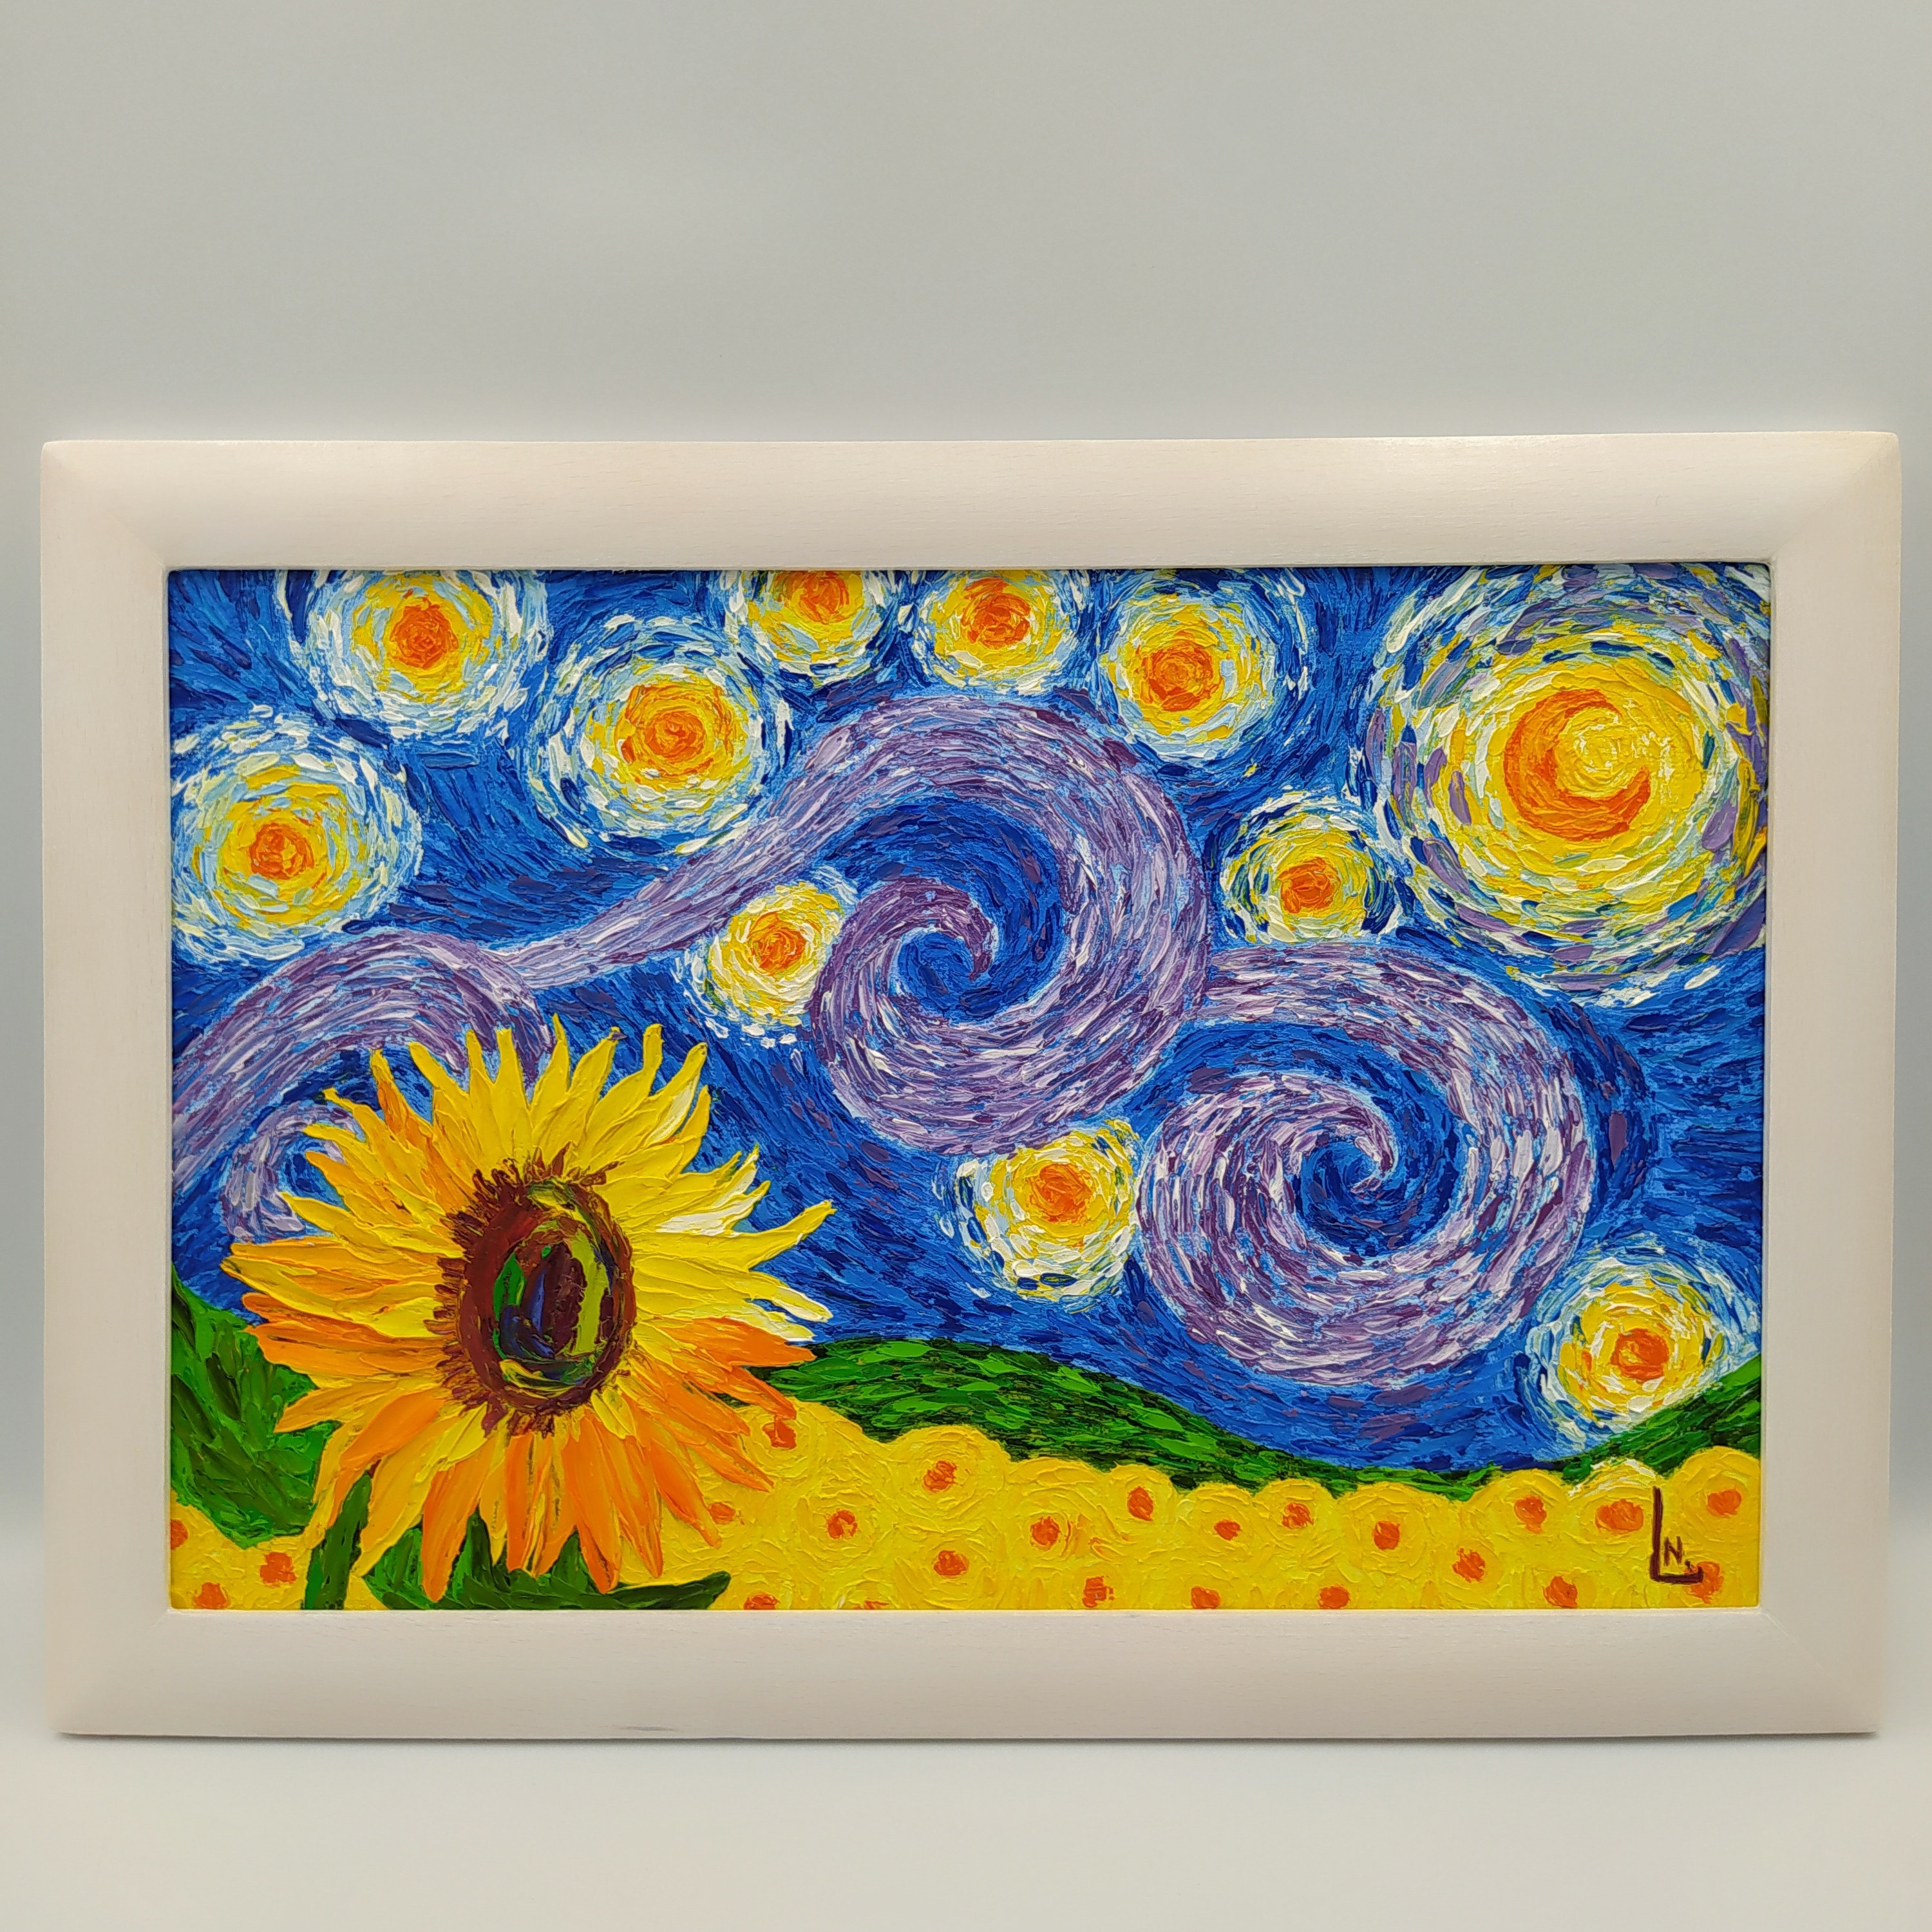 OUSBA Van Gogh Art Postcards - 30pcs Art Gift Invitation Post Cards Set Famous Painting Starry Night Sunflowers Famous Paintings Postcards for